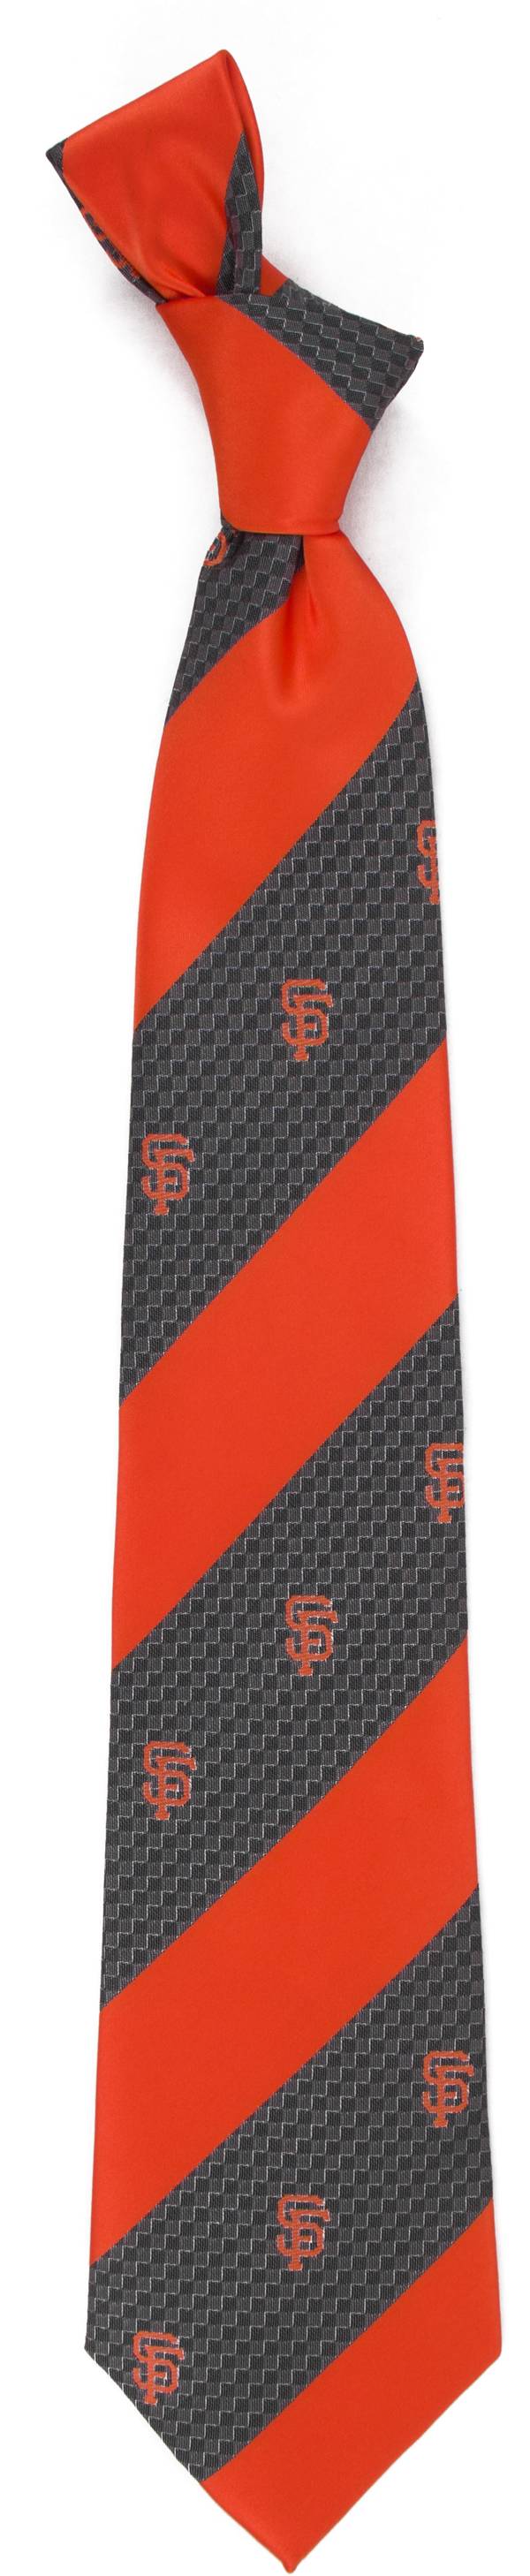 Eagles Wings San Francisco Giants Geo Stripe Necktie product image